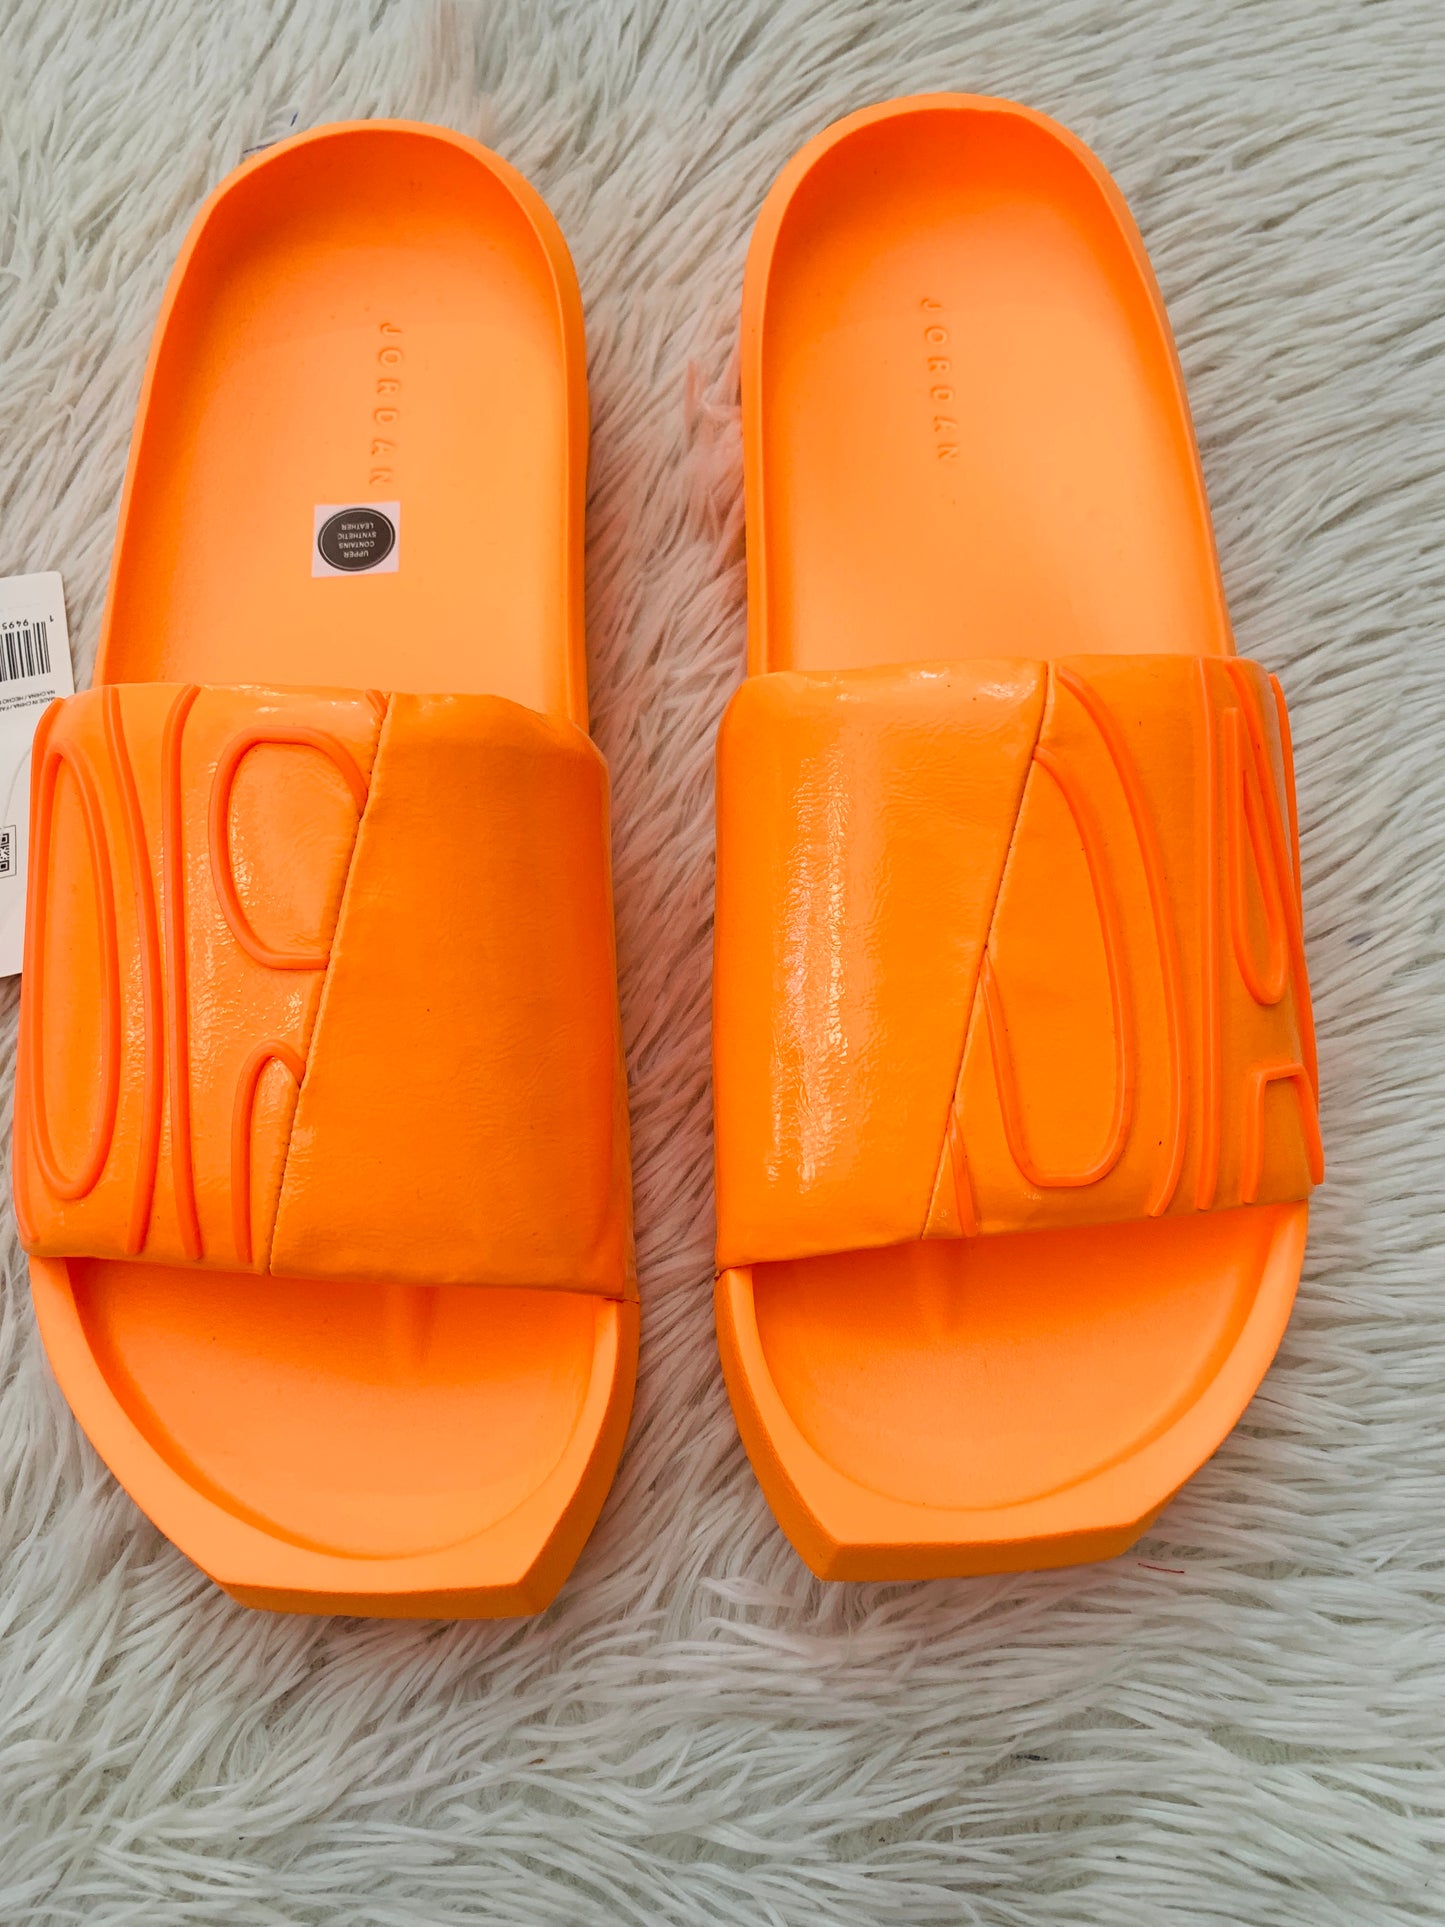 Sandalias Jordan original en color naranja diseño de letras JOR.